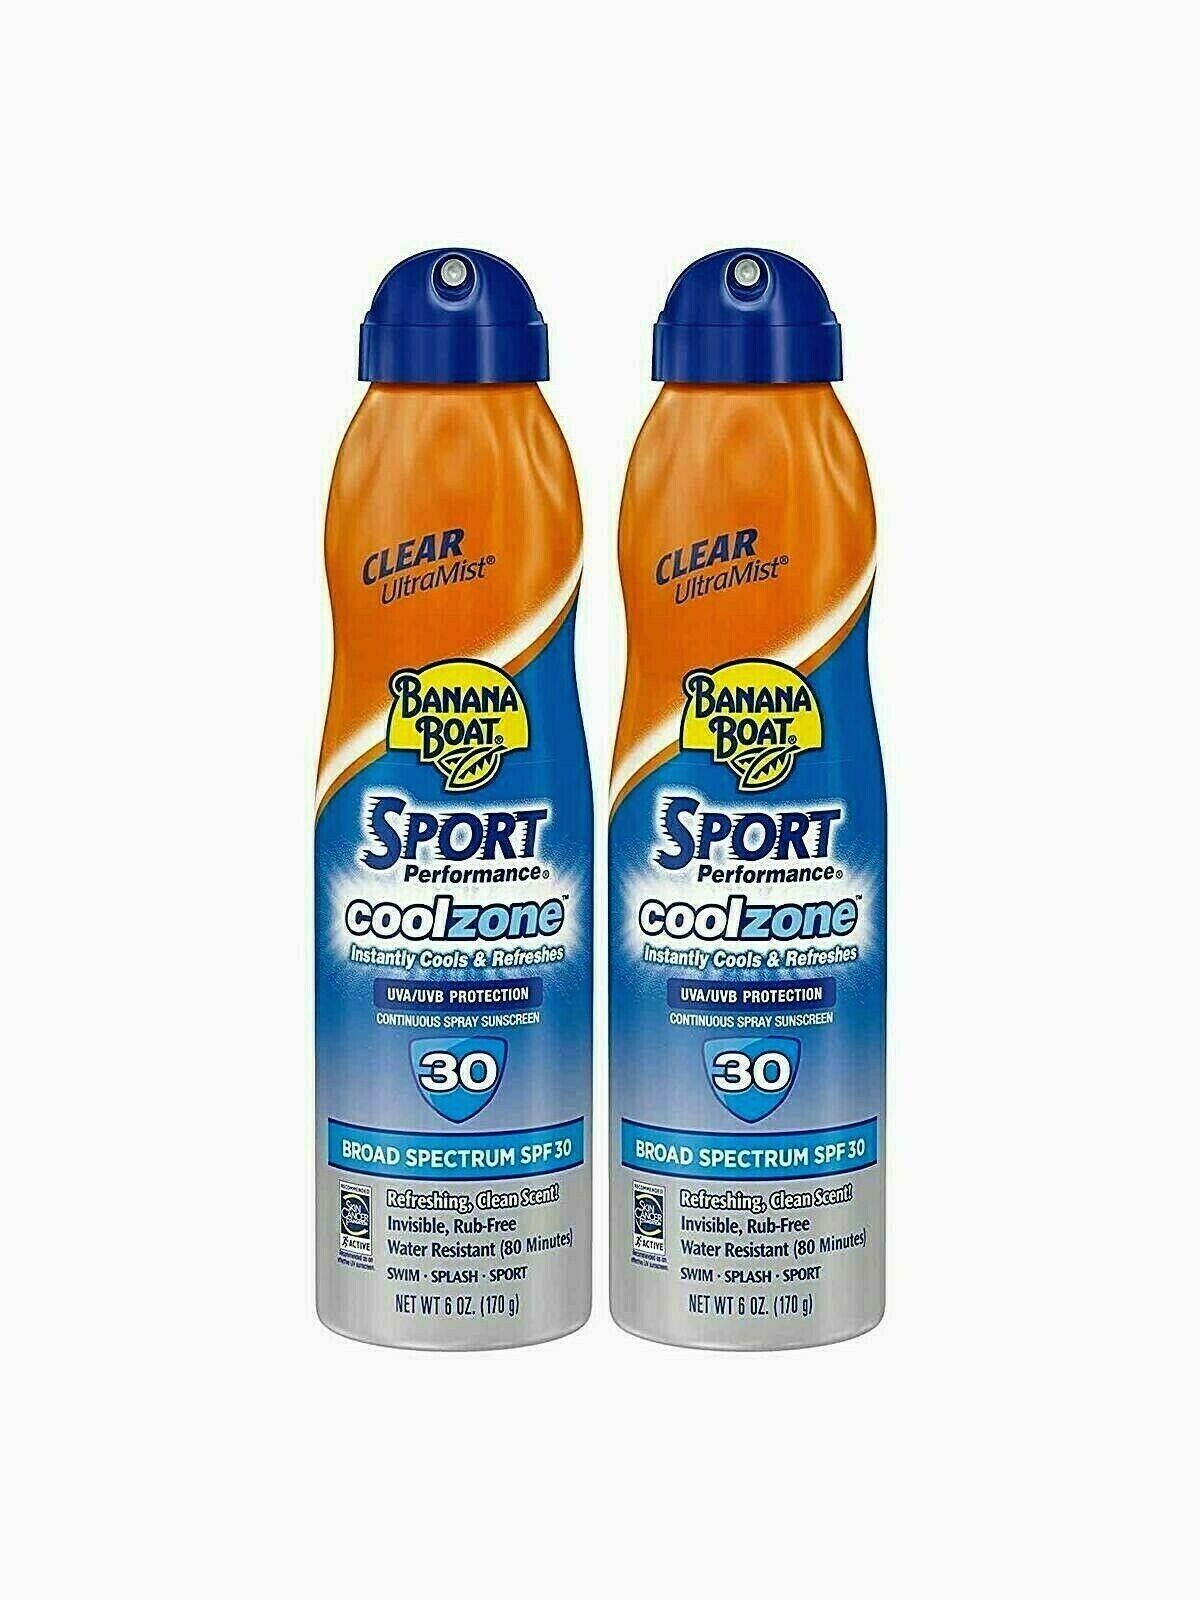 Banana Boat Sport Performance Coolzone Sunscreen Spray, Twin Pack, SPF 30, 6 OZ